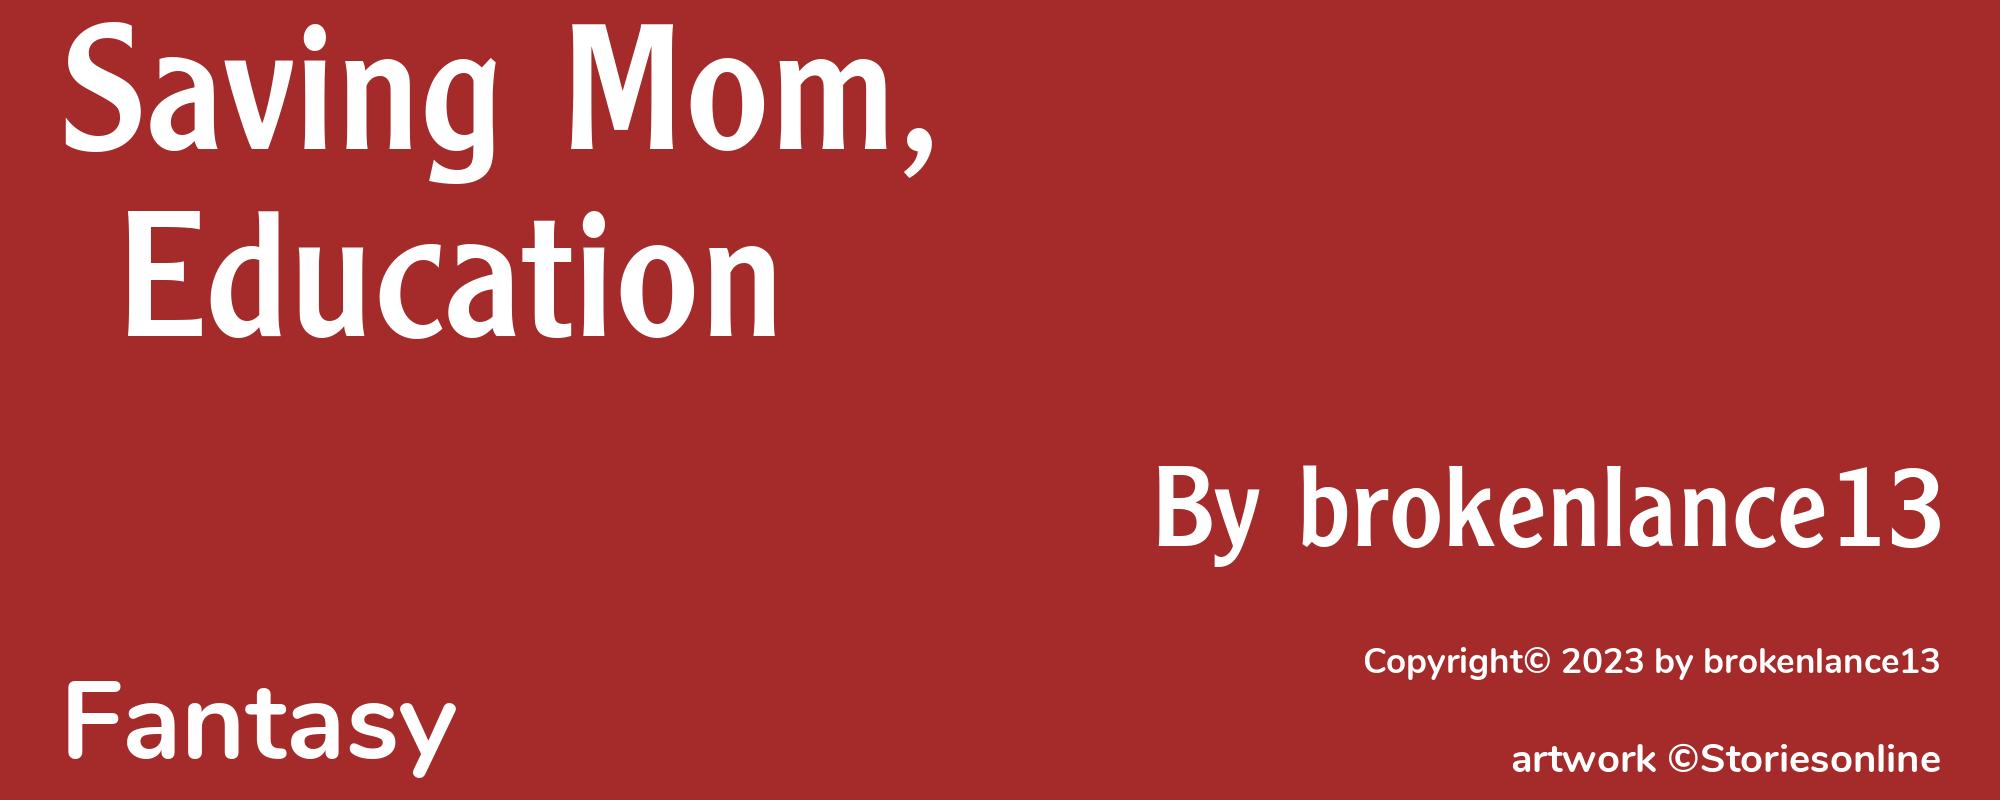 Saving Mom, Education - Cover